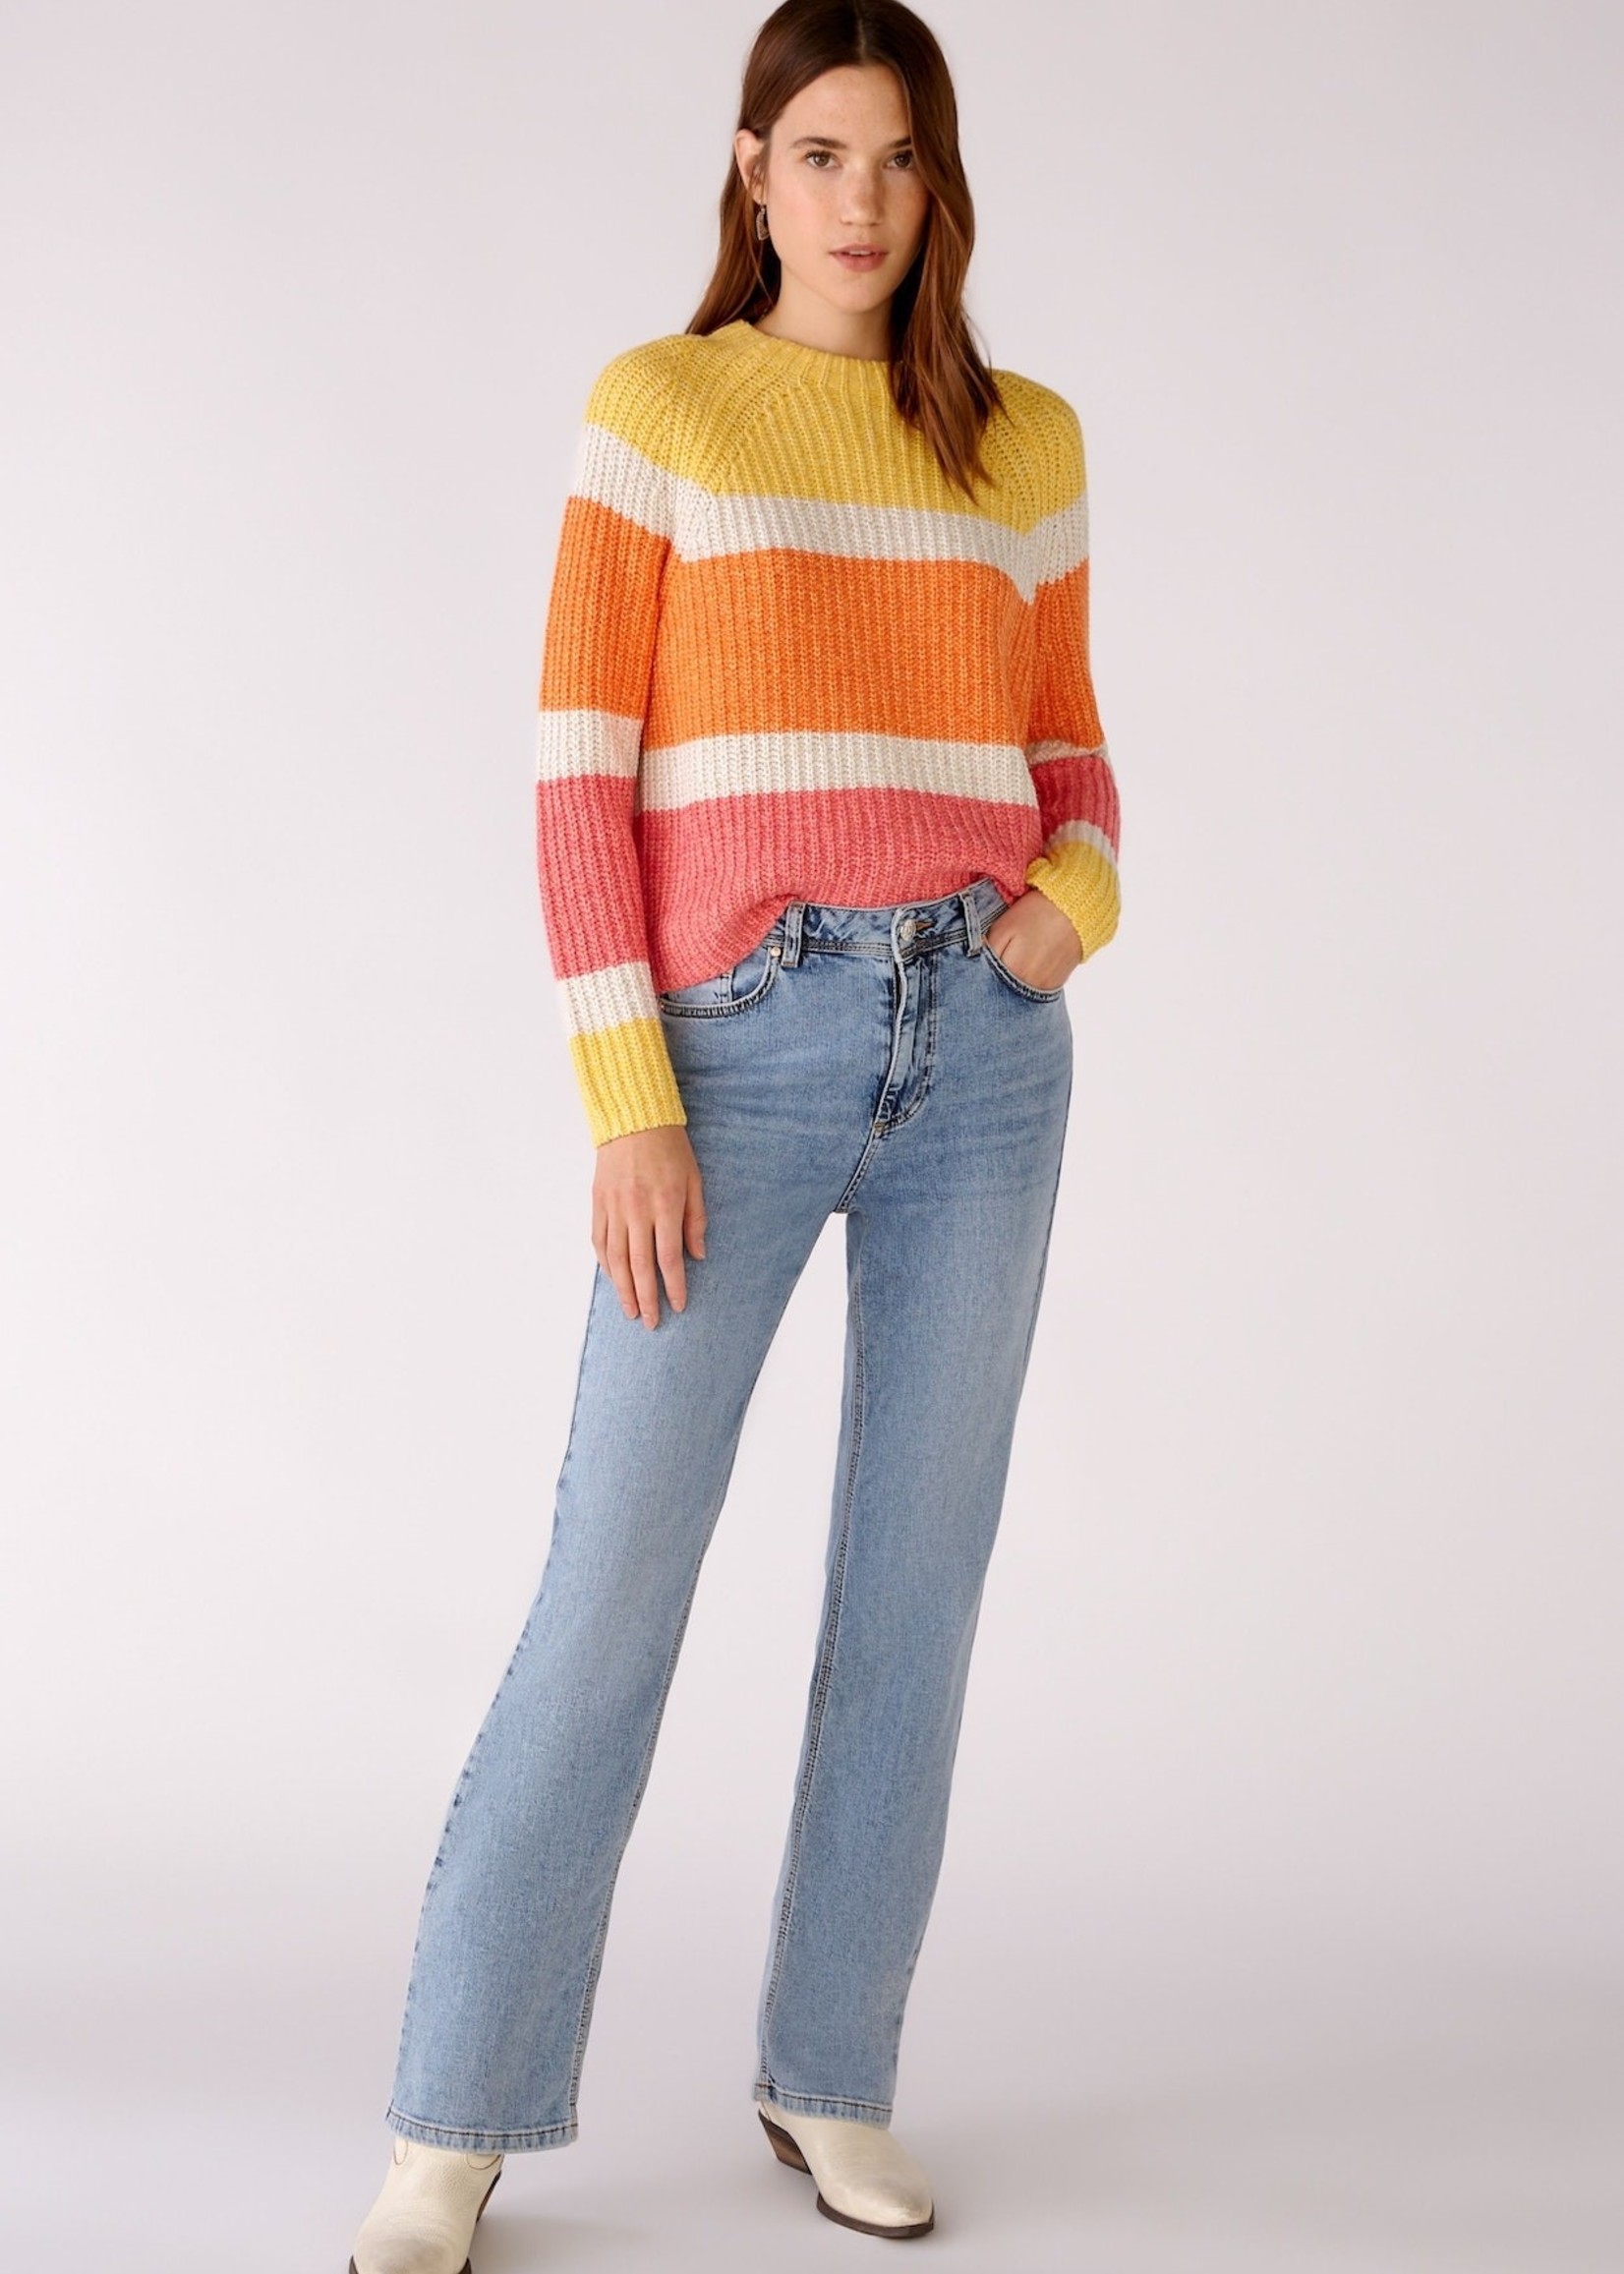 Oui Oui knit pullover 78201